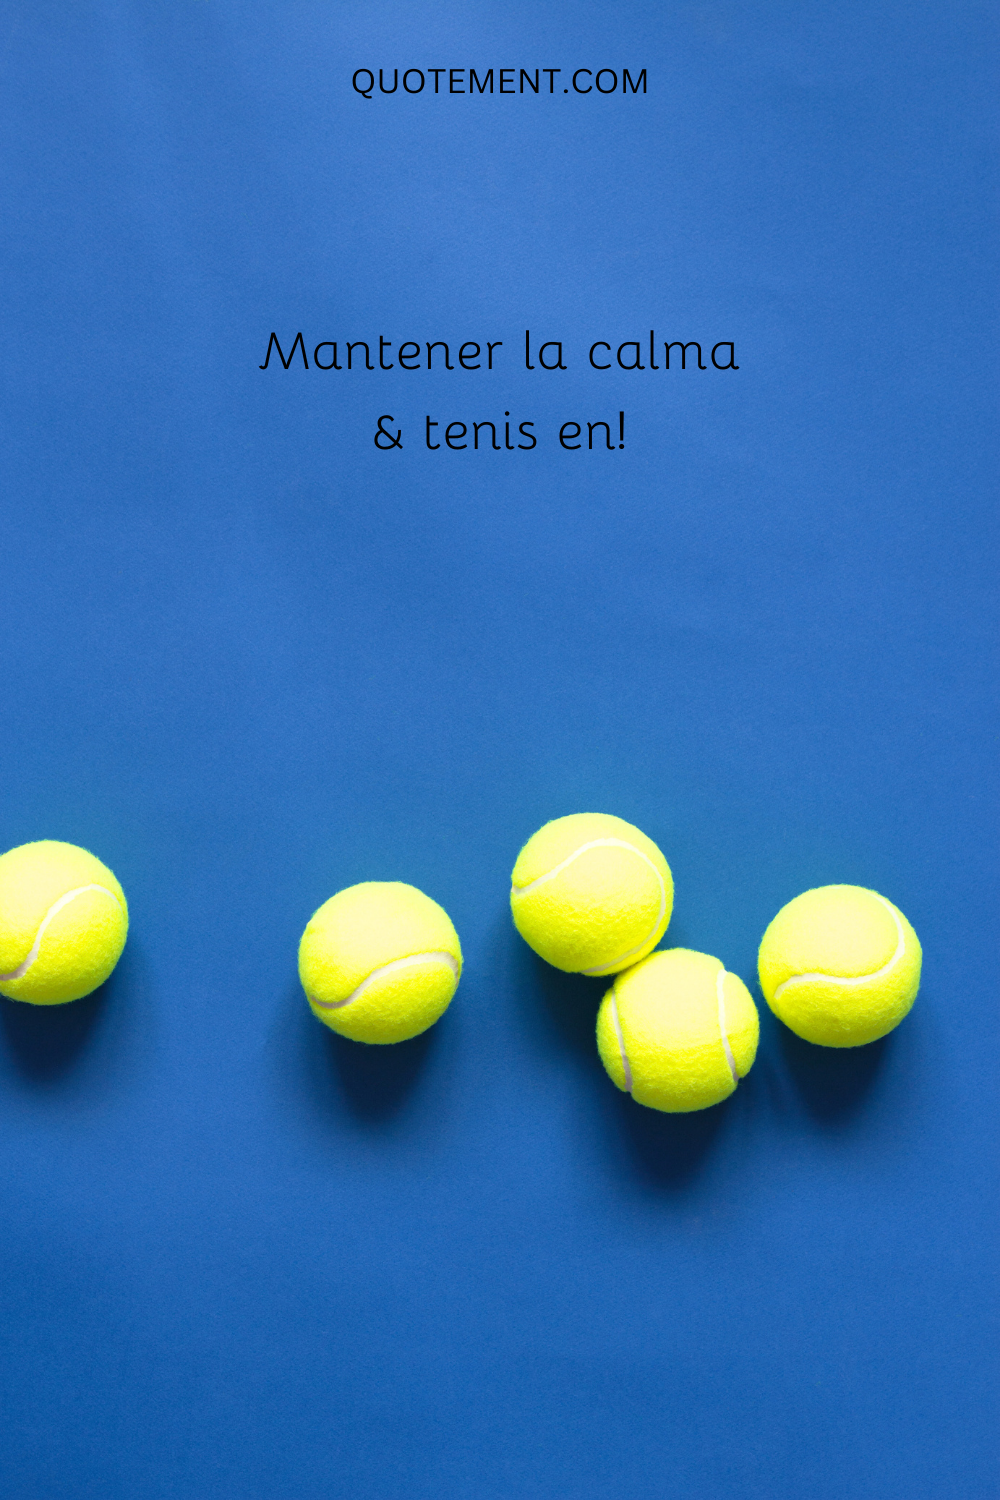 ¡Keep calm & tennis on!